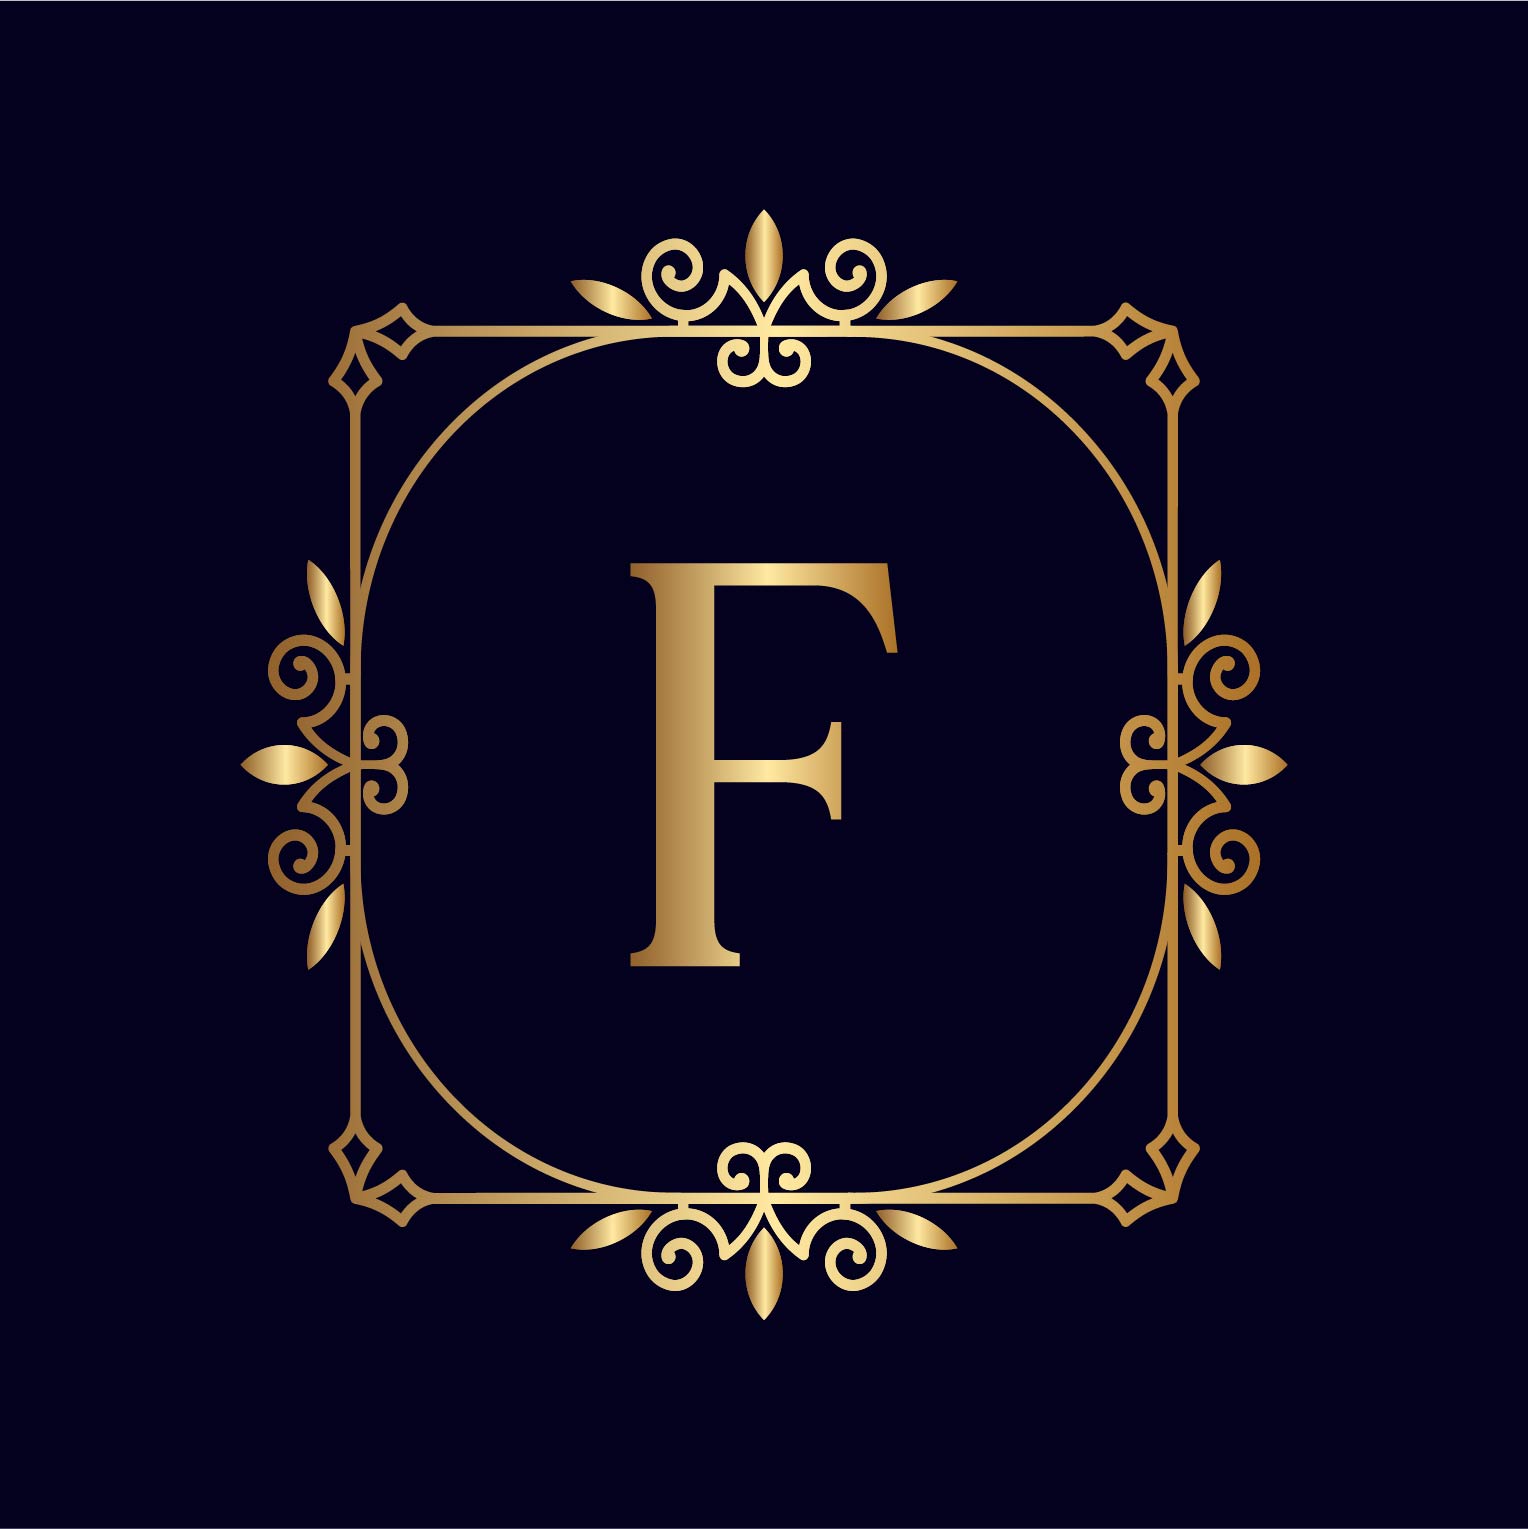 Letter de or ed logo design Royalty Free Vector Image